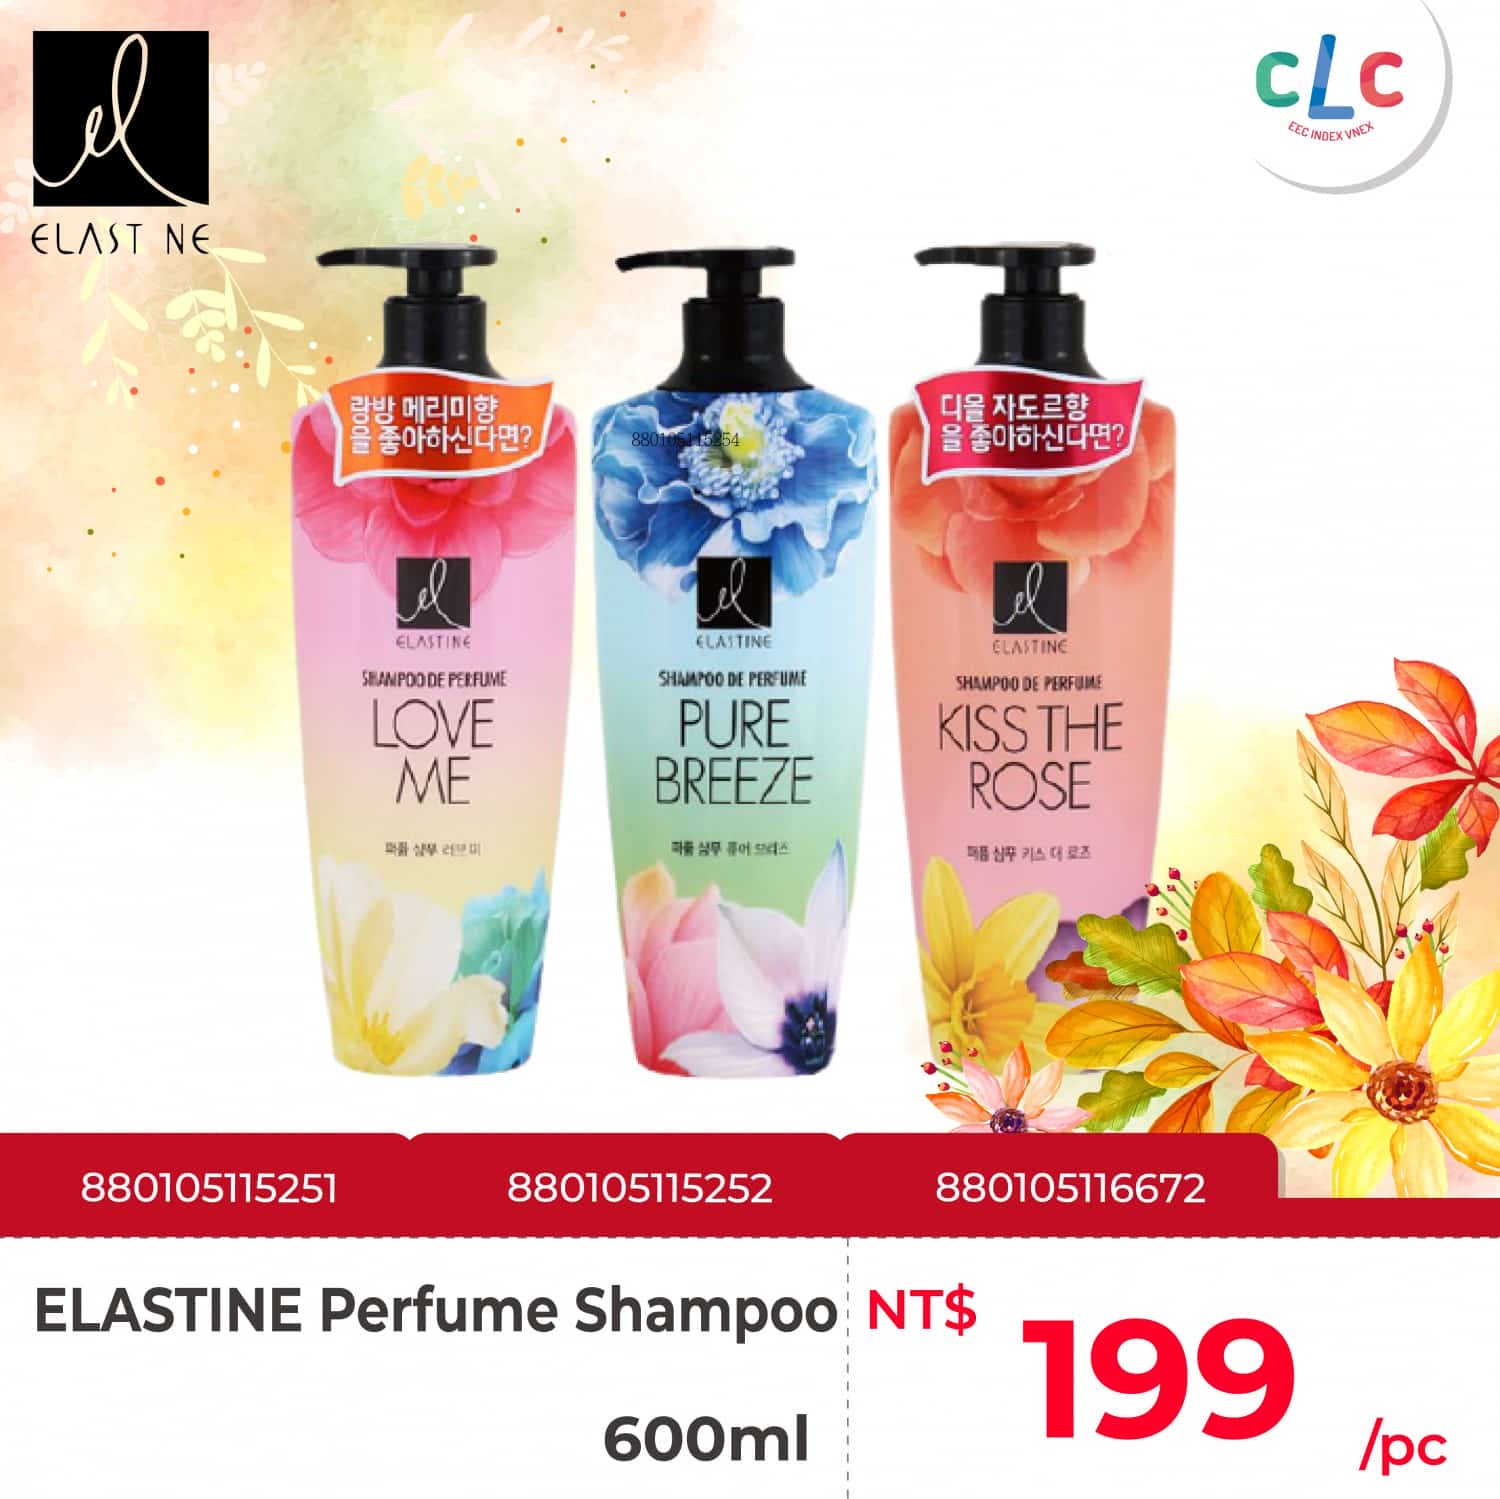 ELASTINE Perfume Shampoo